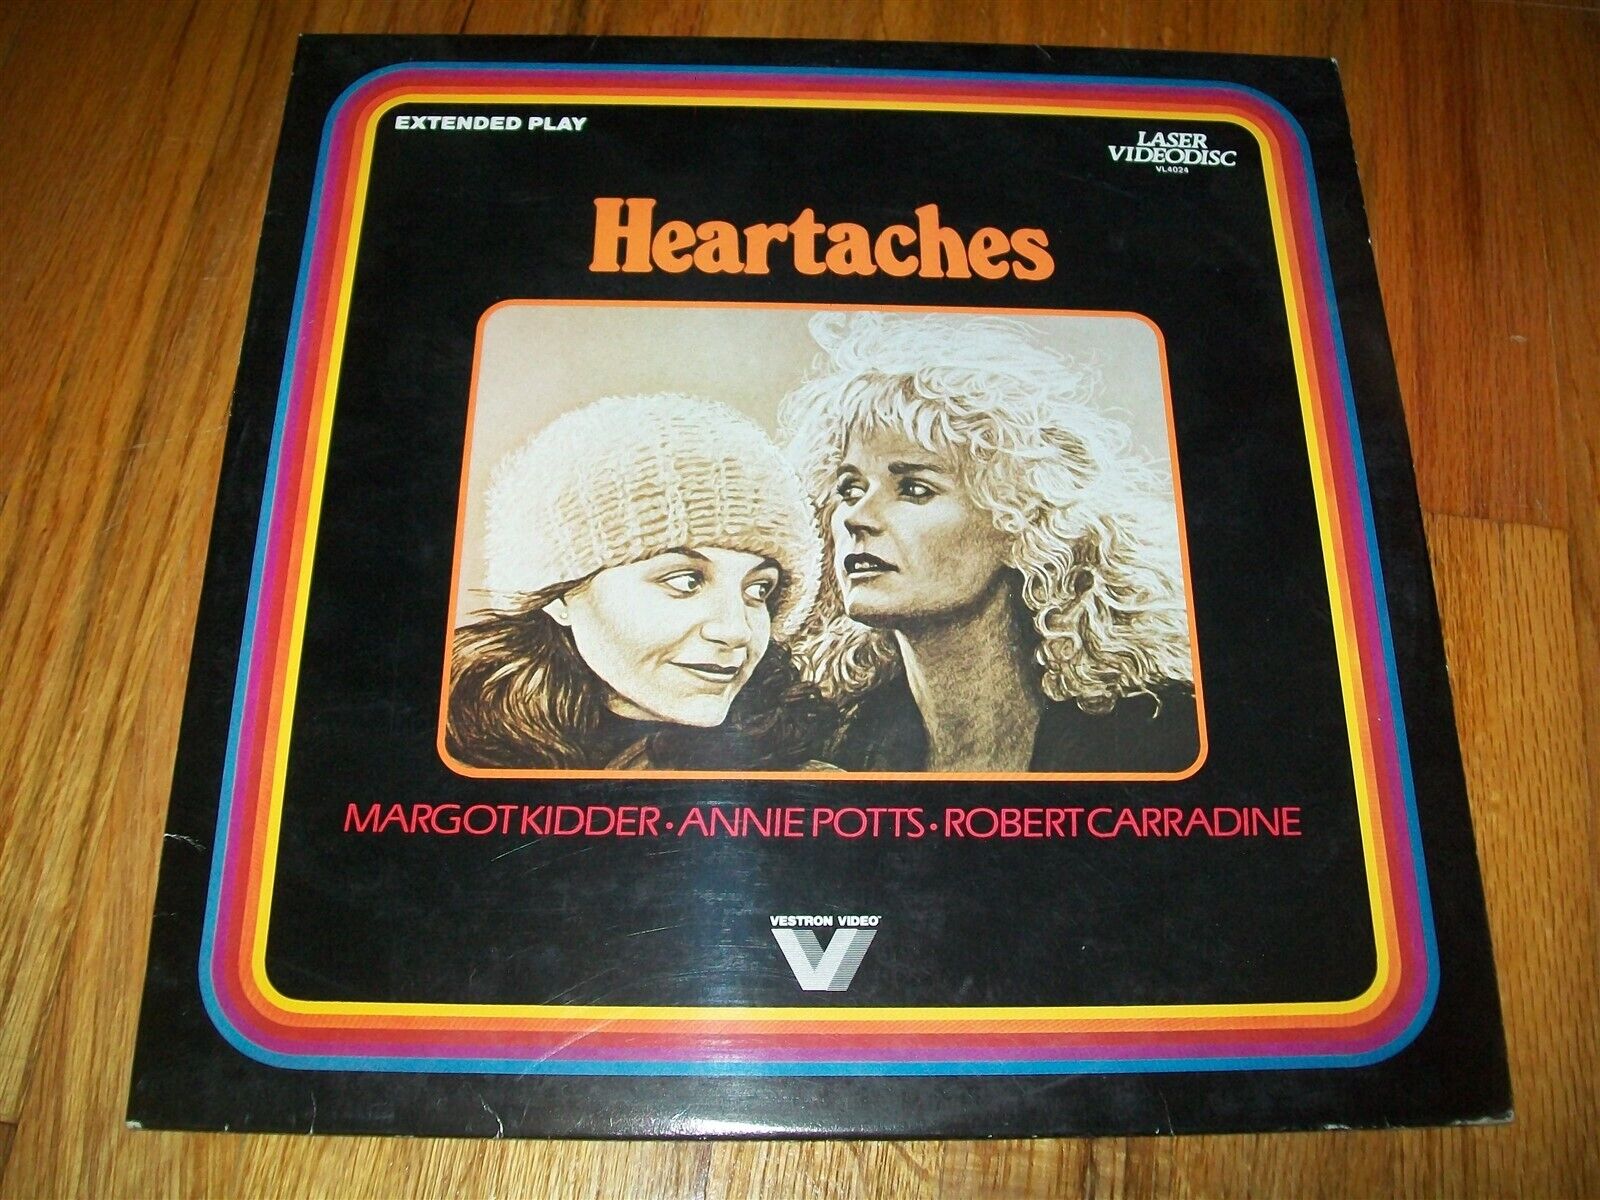 Heartaches Laserdisc Ld Very Good Condition Very Rare Margot Kidder Great Film!